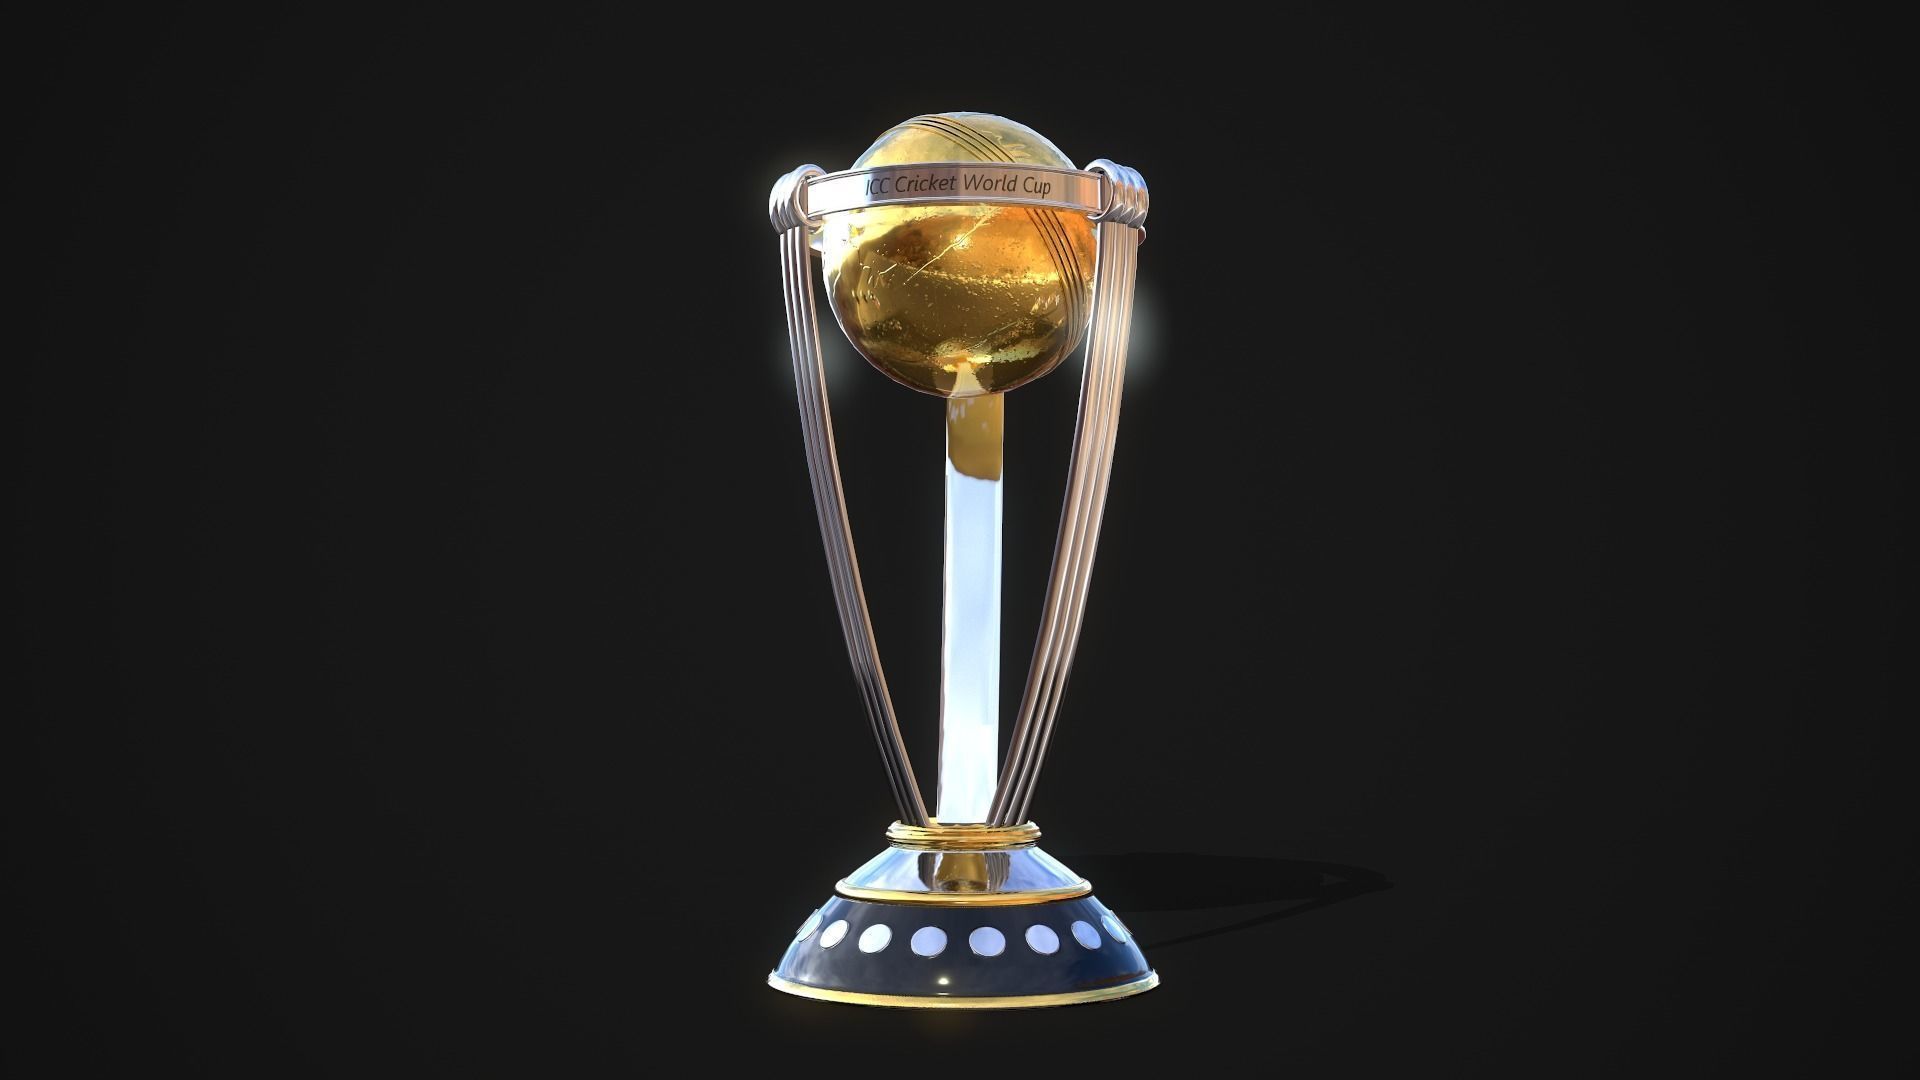 3D Cricket World Cup